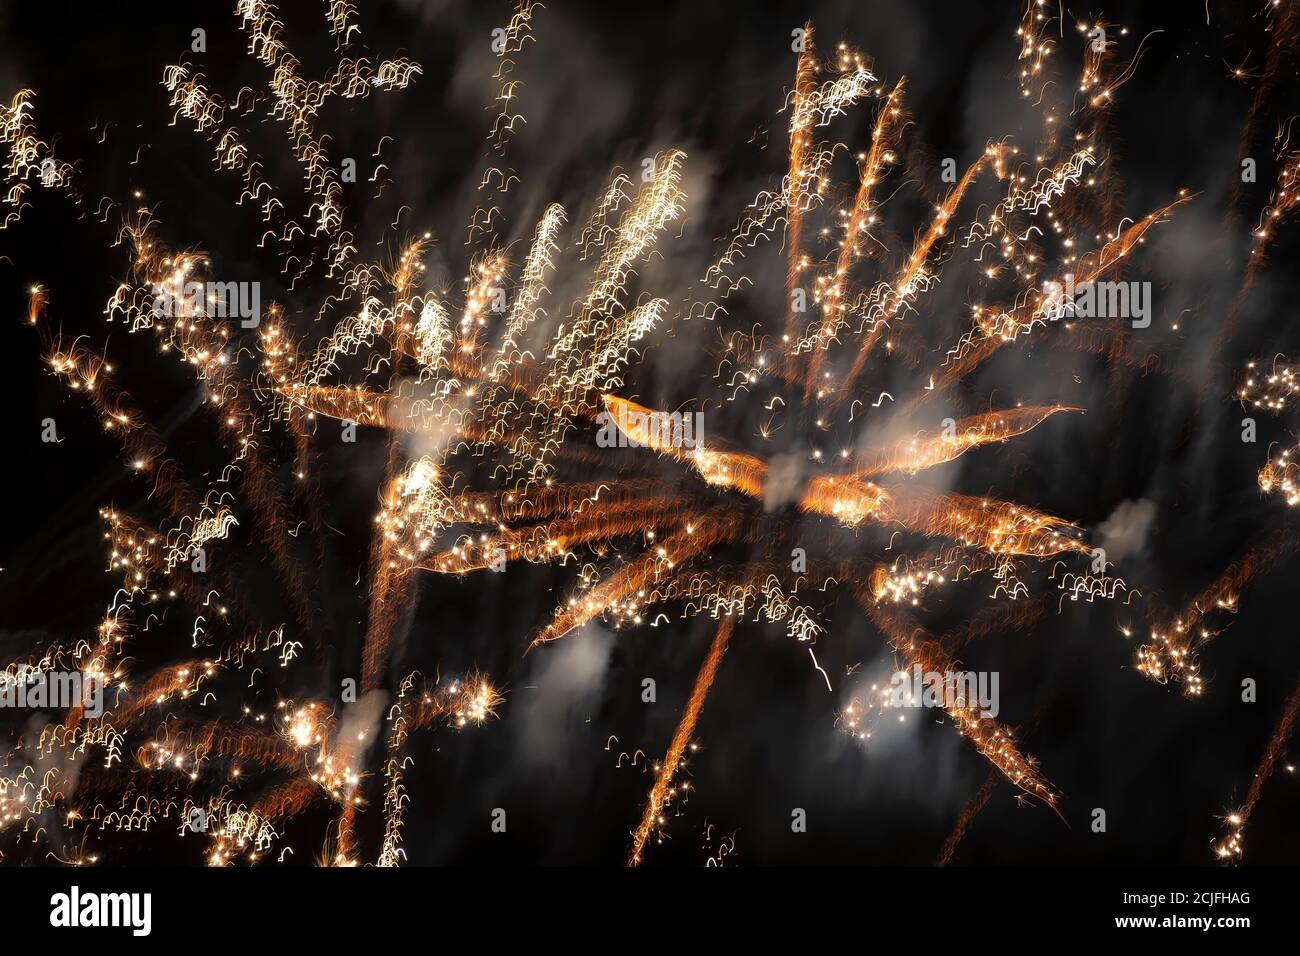 Blurred golden fireworks lights on a black background. Stock Photo